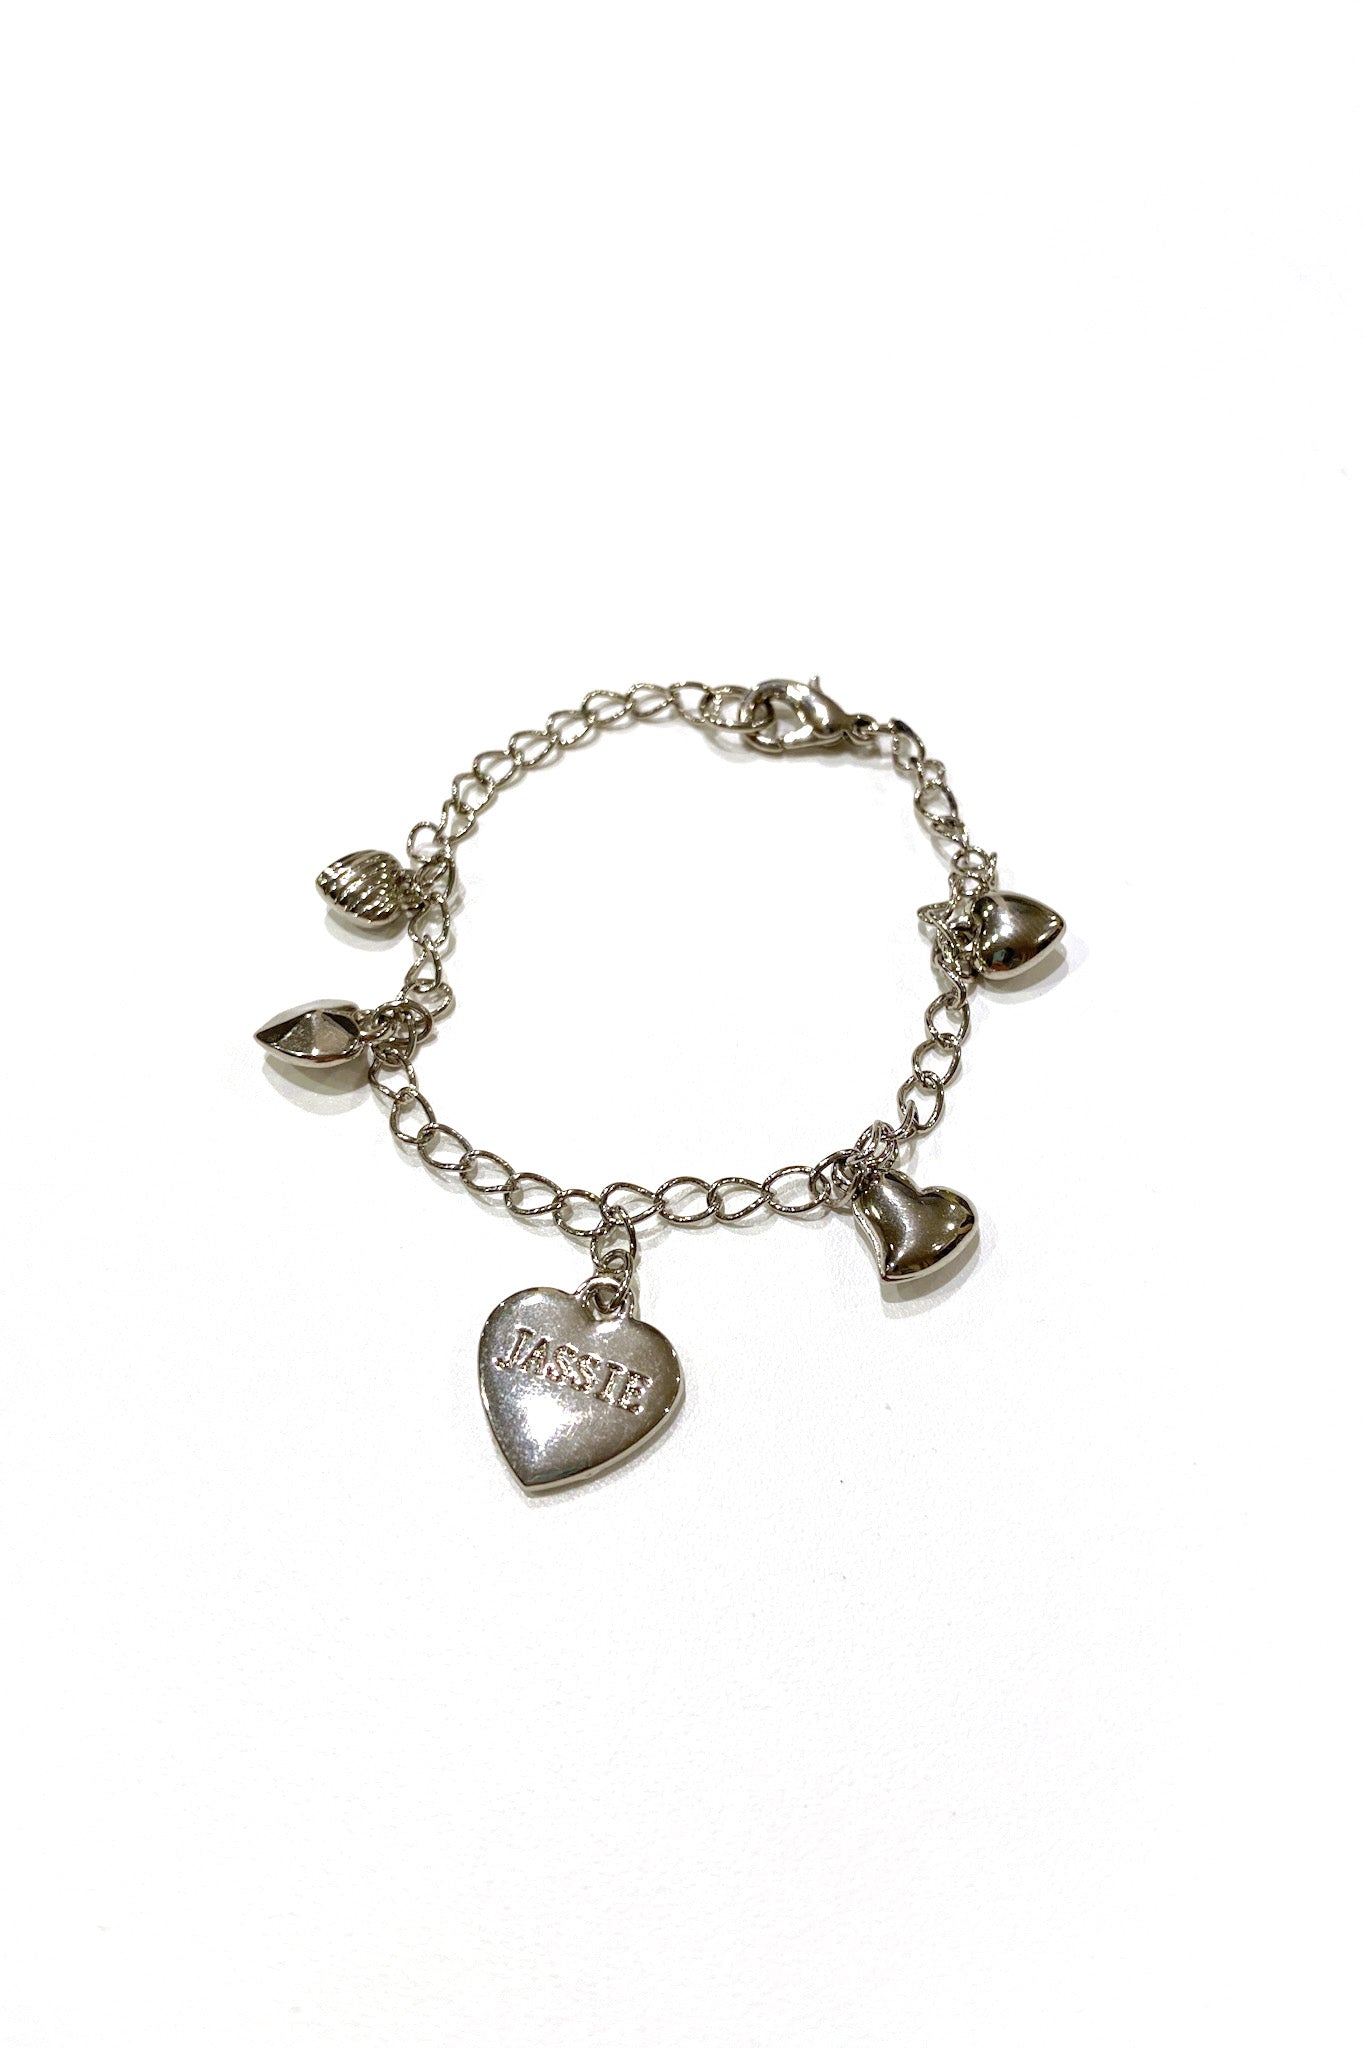 Vintage silver heart bracelet